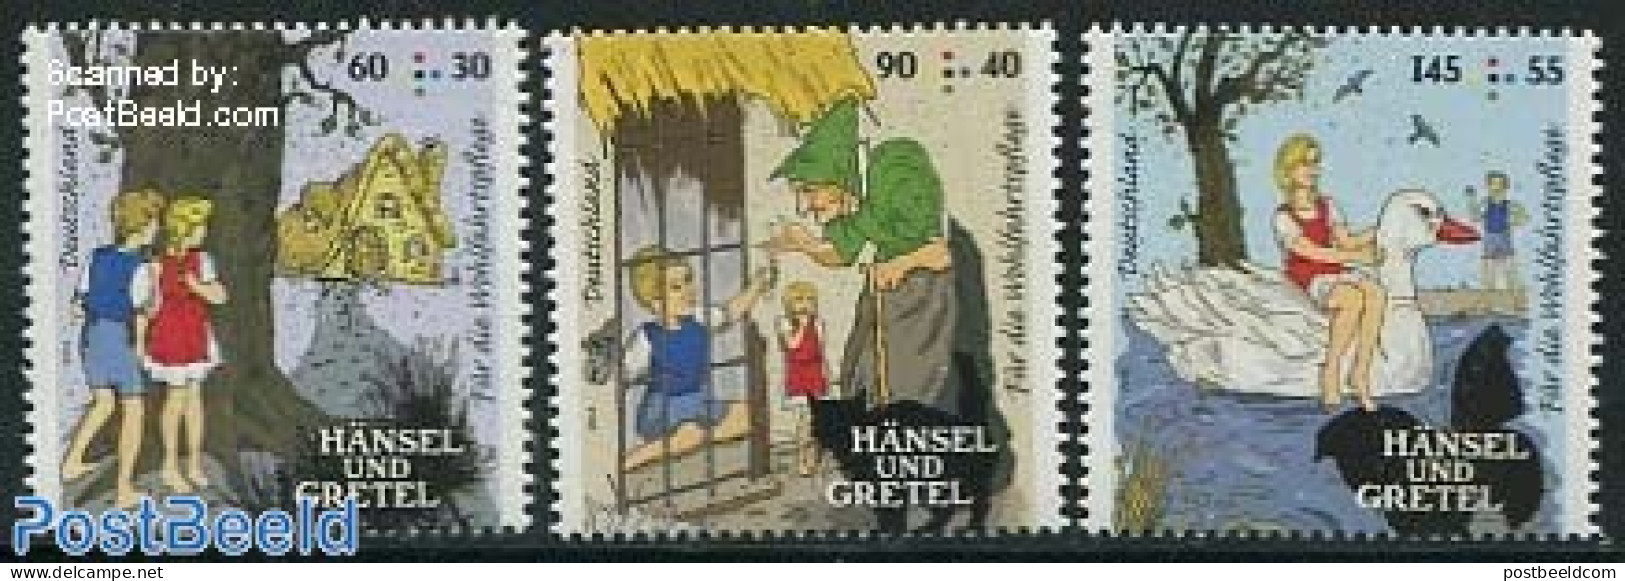 Germany, Federal Republic 2014 Welfare, Hansel And Gretel 3v, Mint NH, Art - Fairytales - Neufs